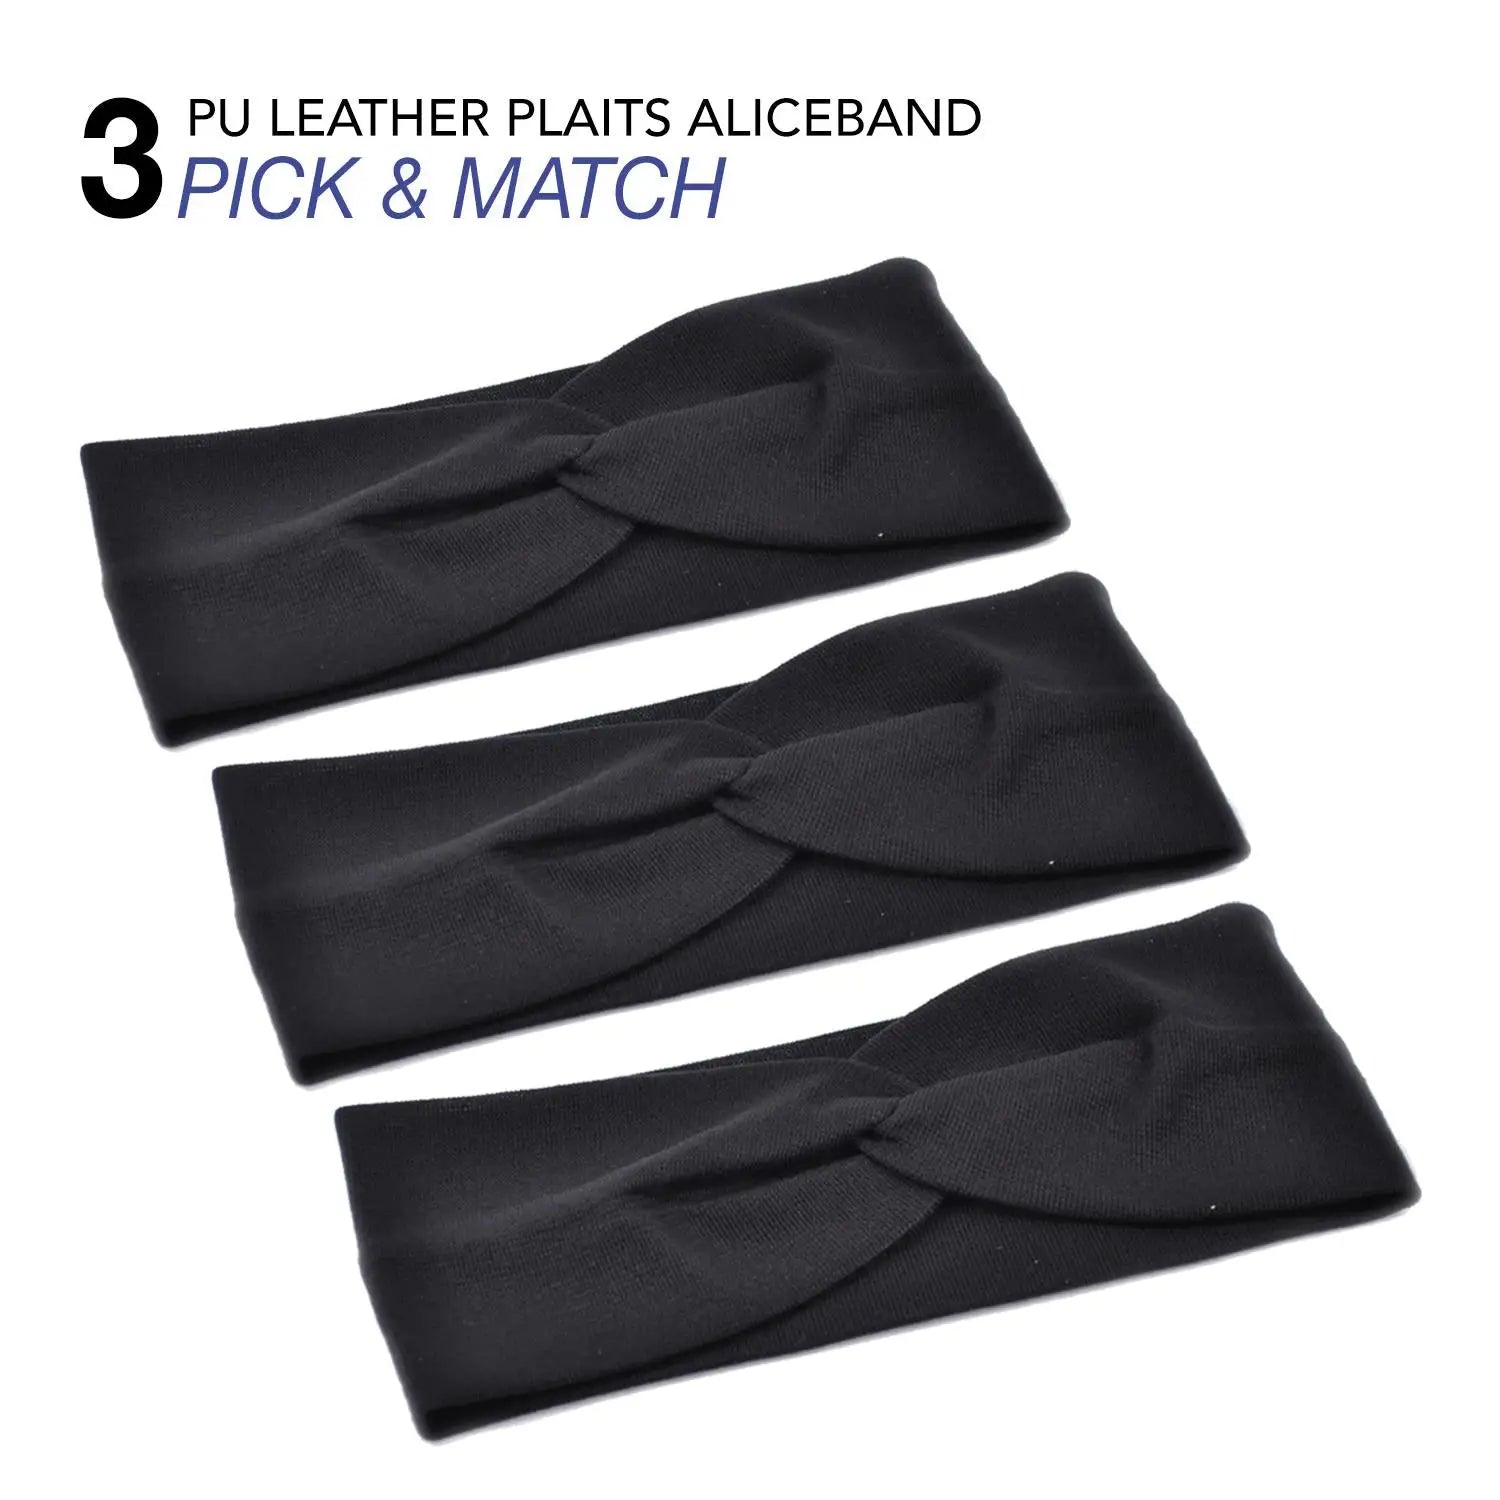 3-pack of black knot yoga headbands from Versatile Knot Yoga Headband Trio.